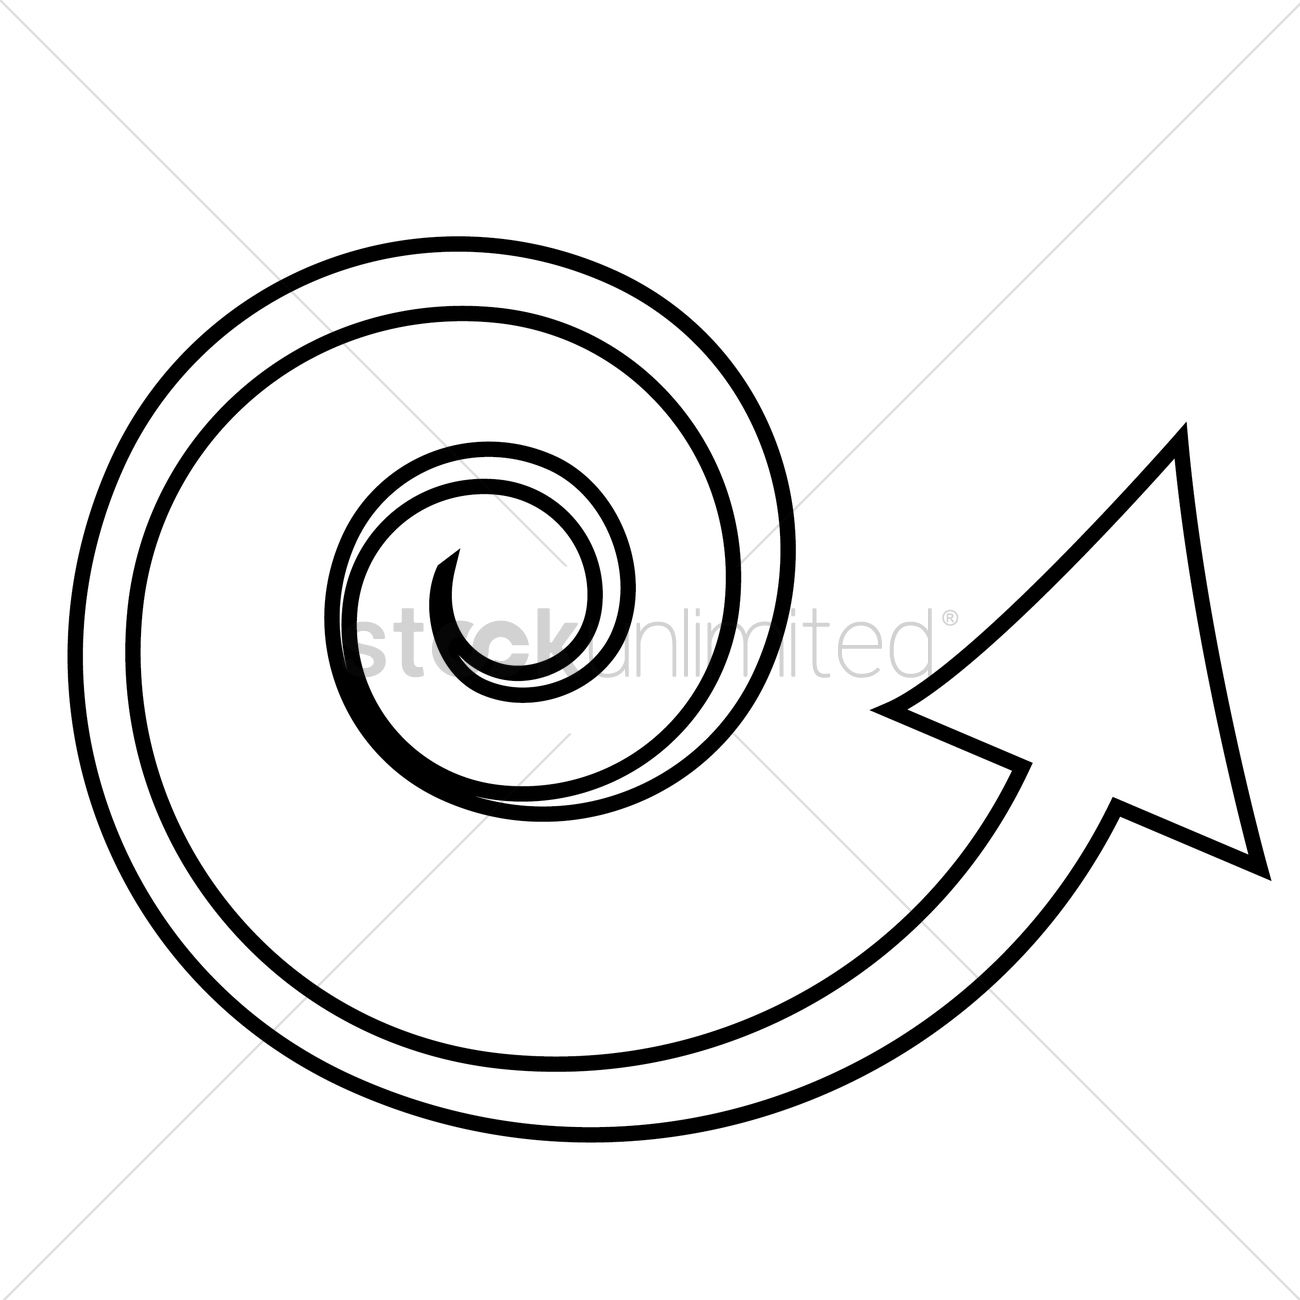 Spiral arrow Vector Image.